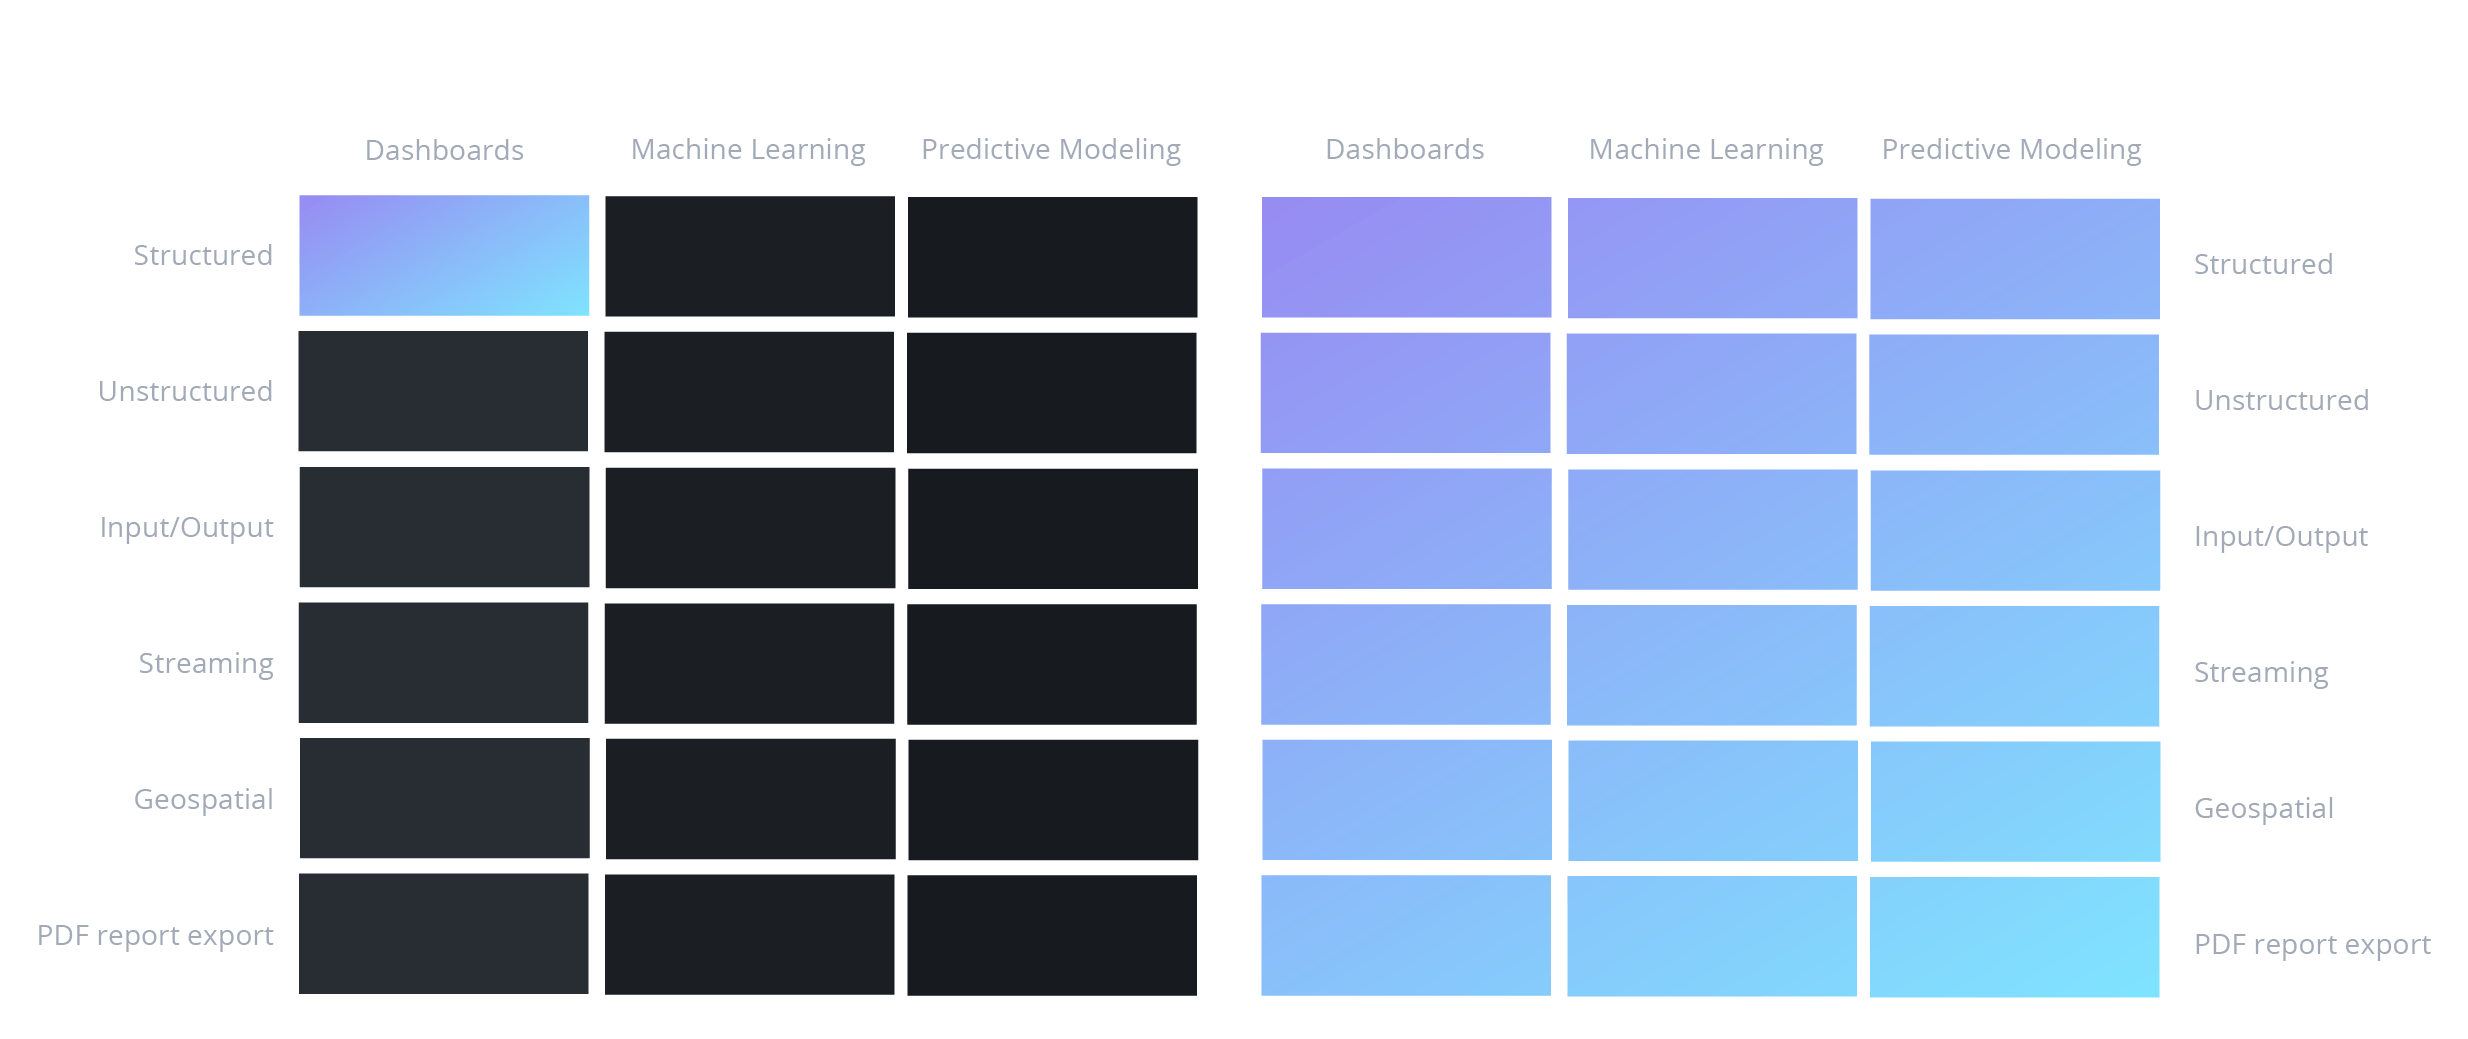 Dash helps data scientist & quants operationalize Python models